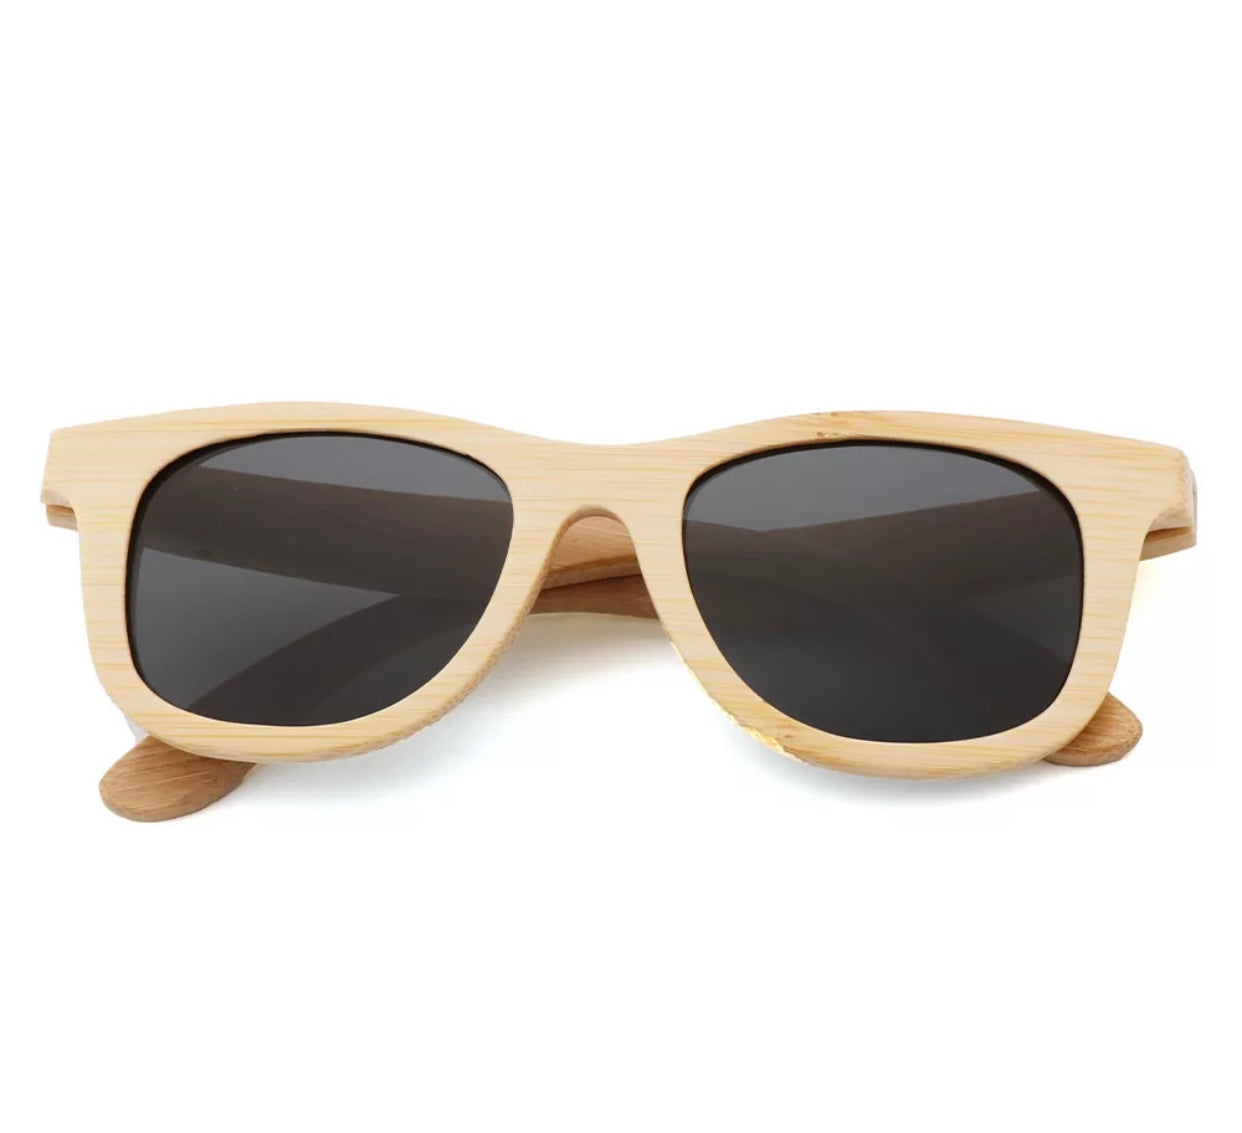 JAXON Eco-friendly Polarized Bamboo Sunglasses for Kids (includes